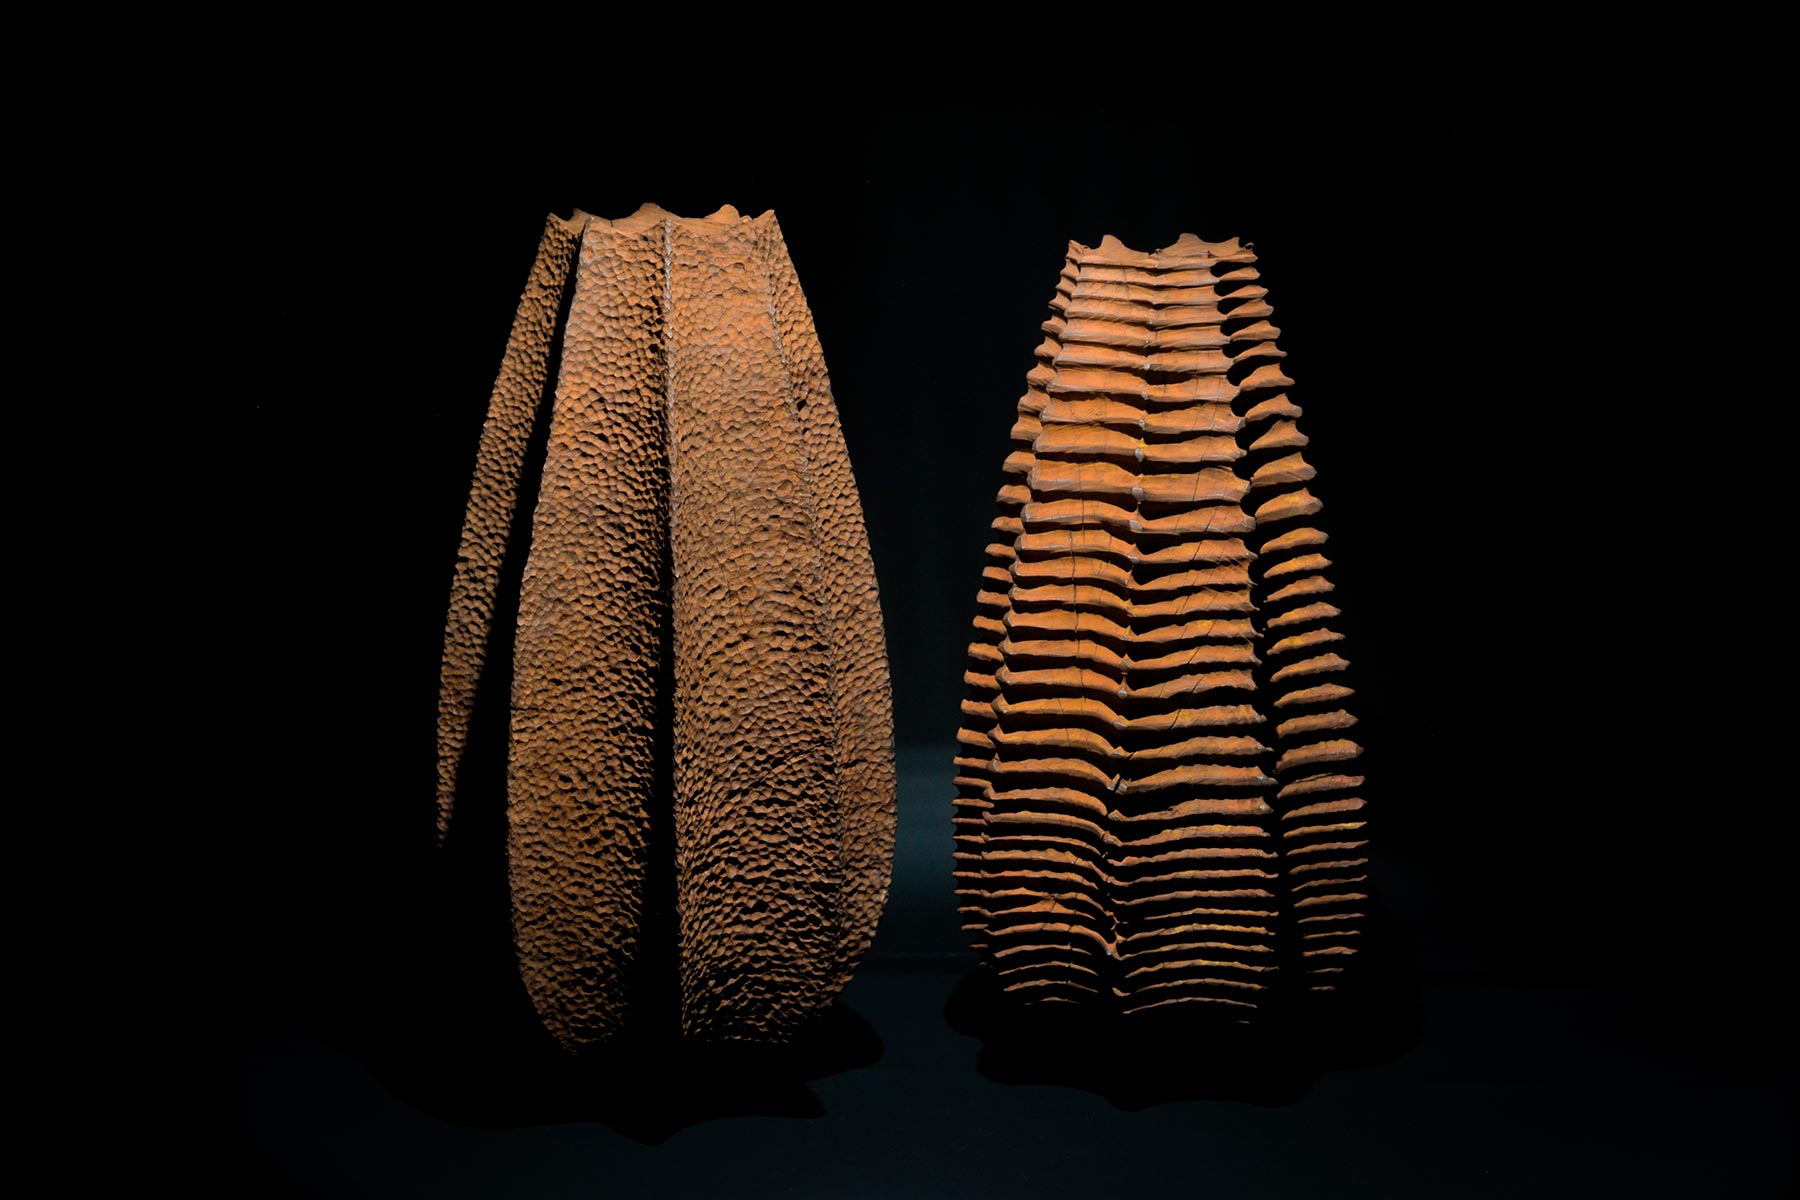 Sculptures Ctenophora wood walnut shellac iron oxide tung oil graphite Lorenzo Franceschinis